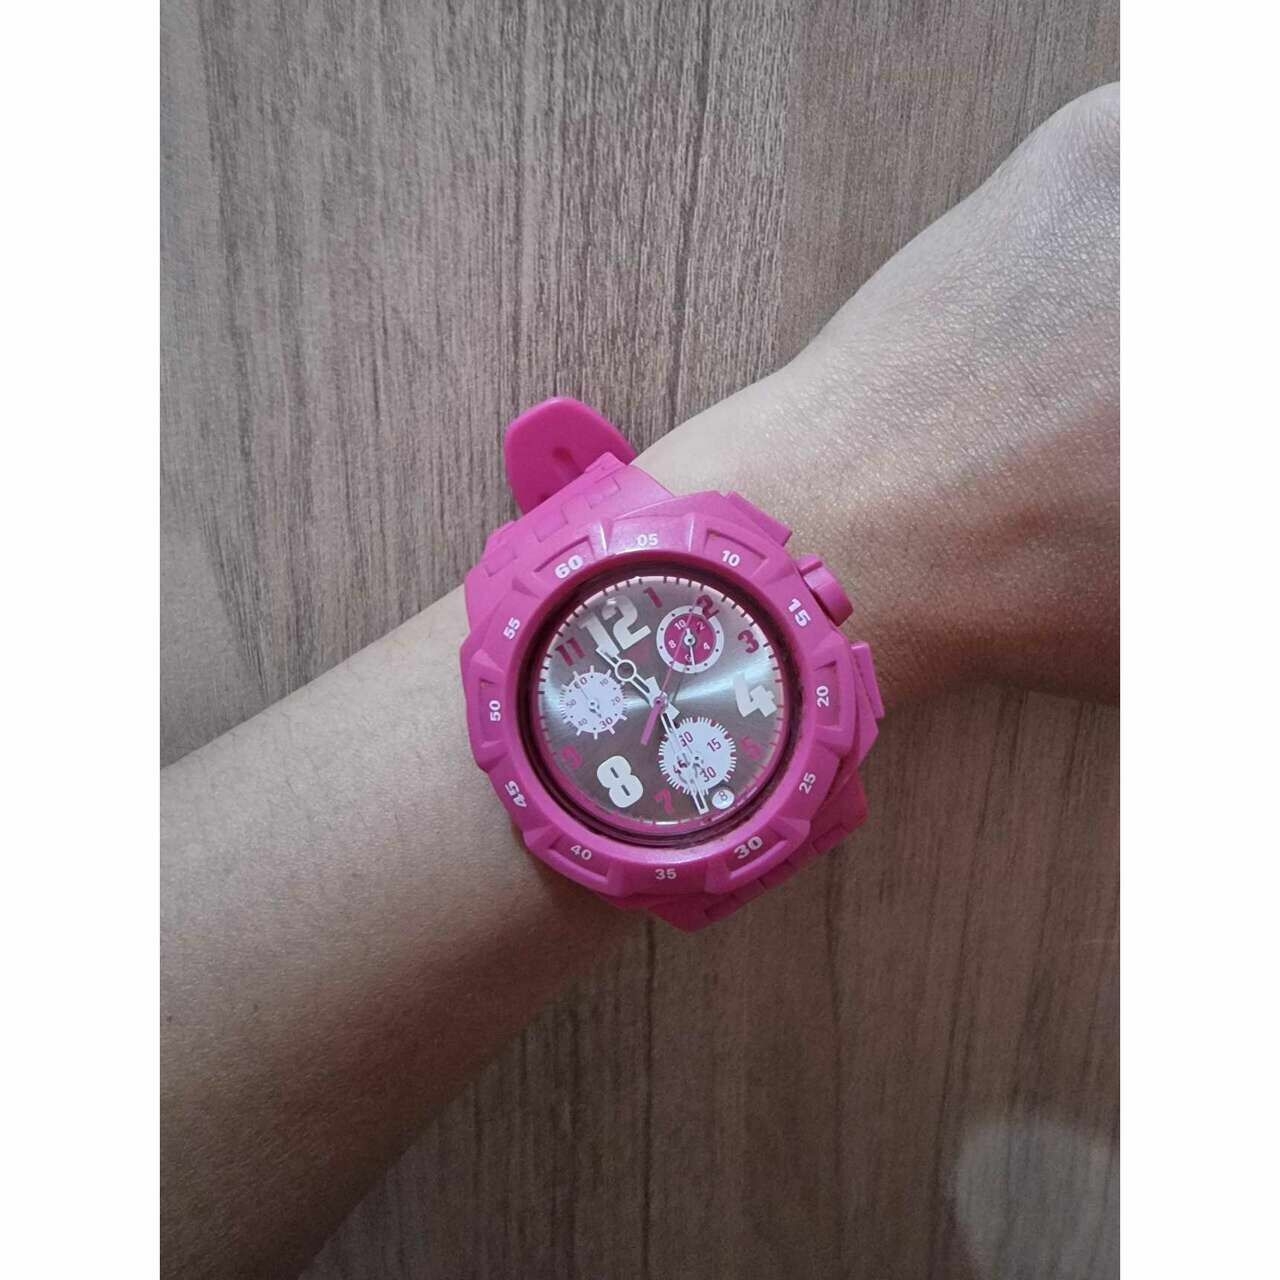 Swatch Pink Watch